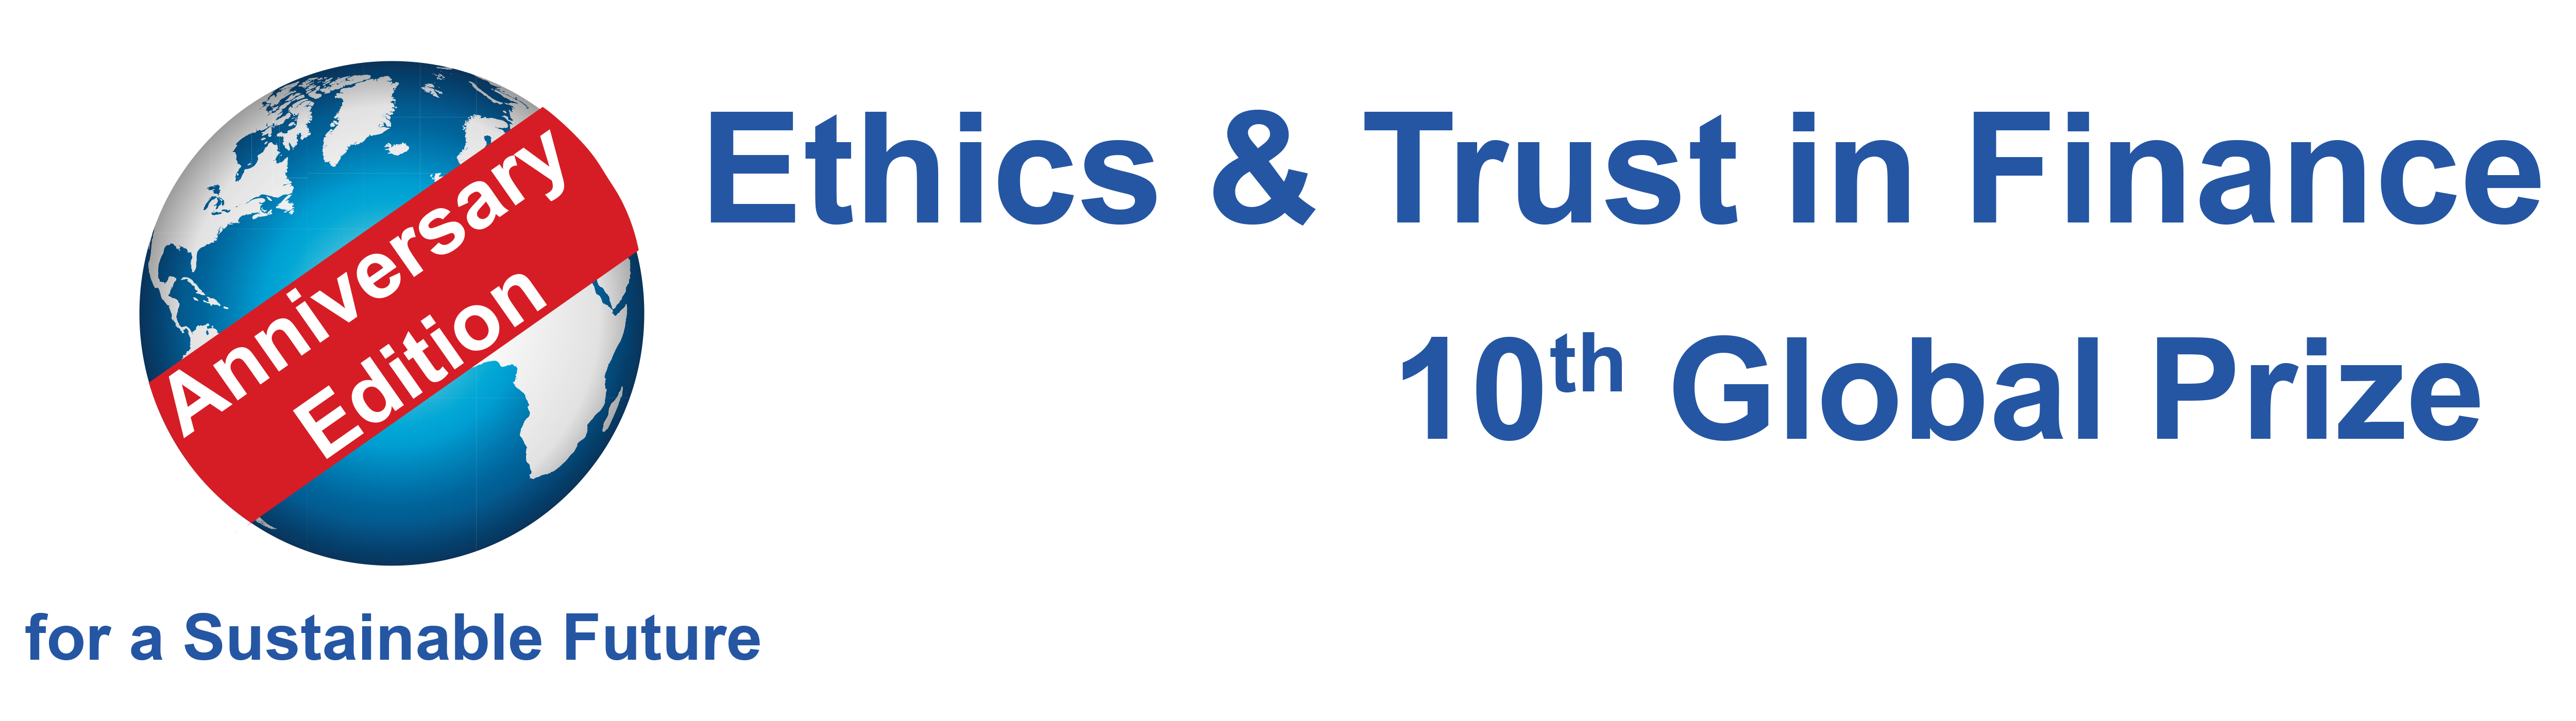 Ethics & Trust in Finance